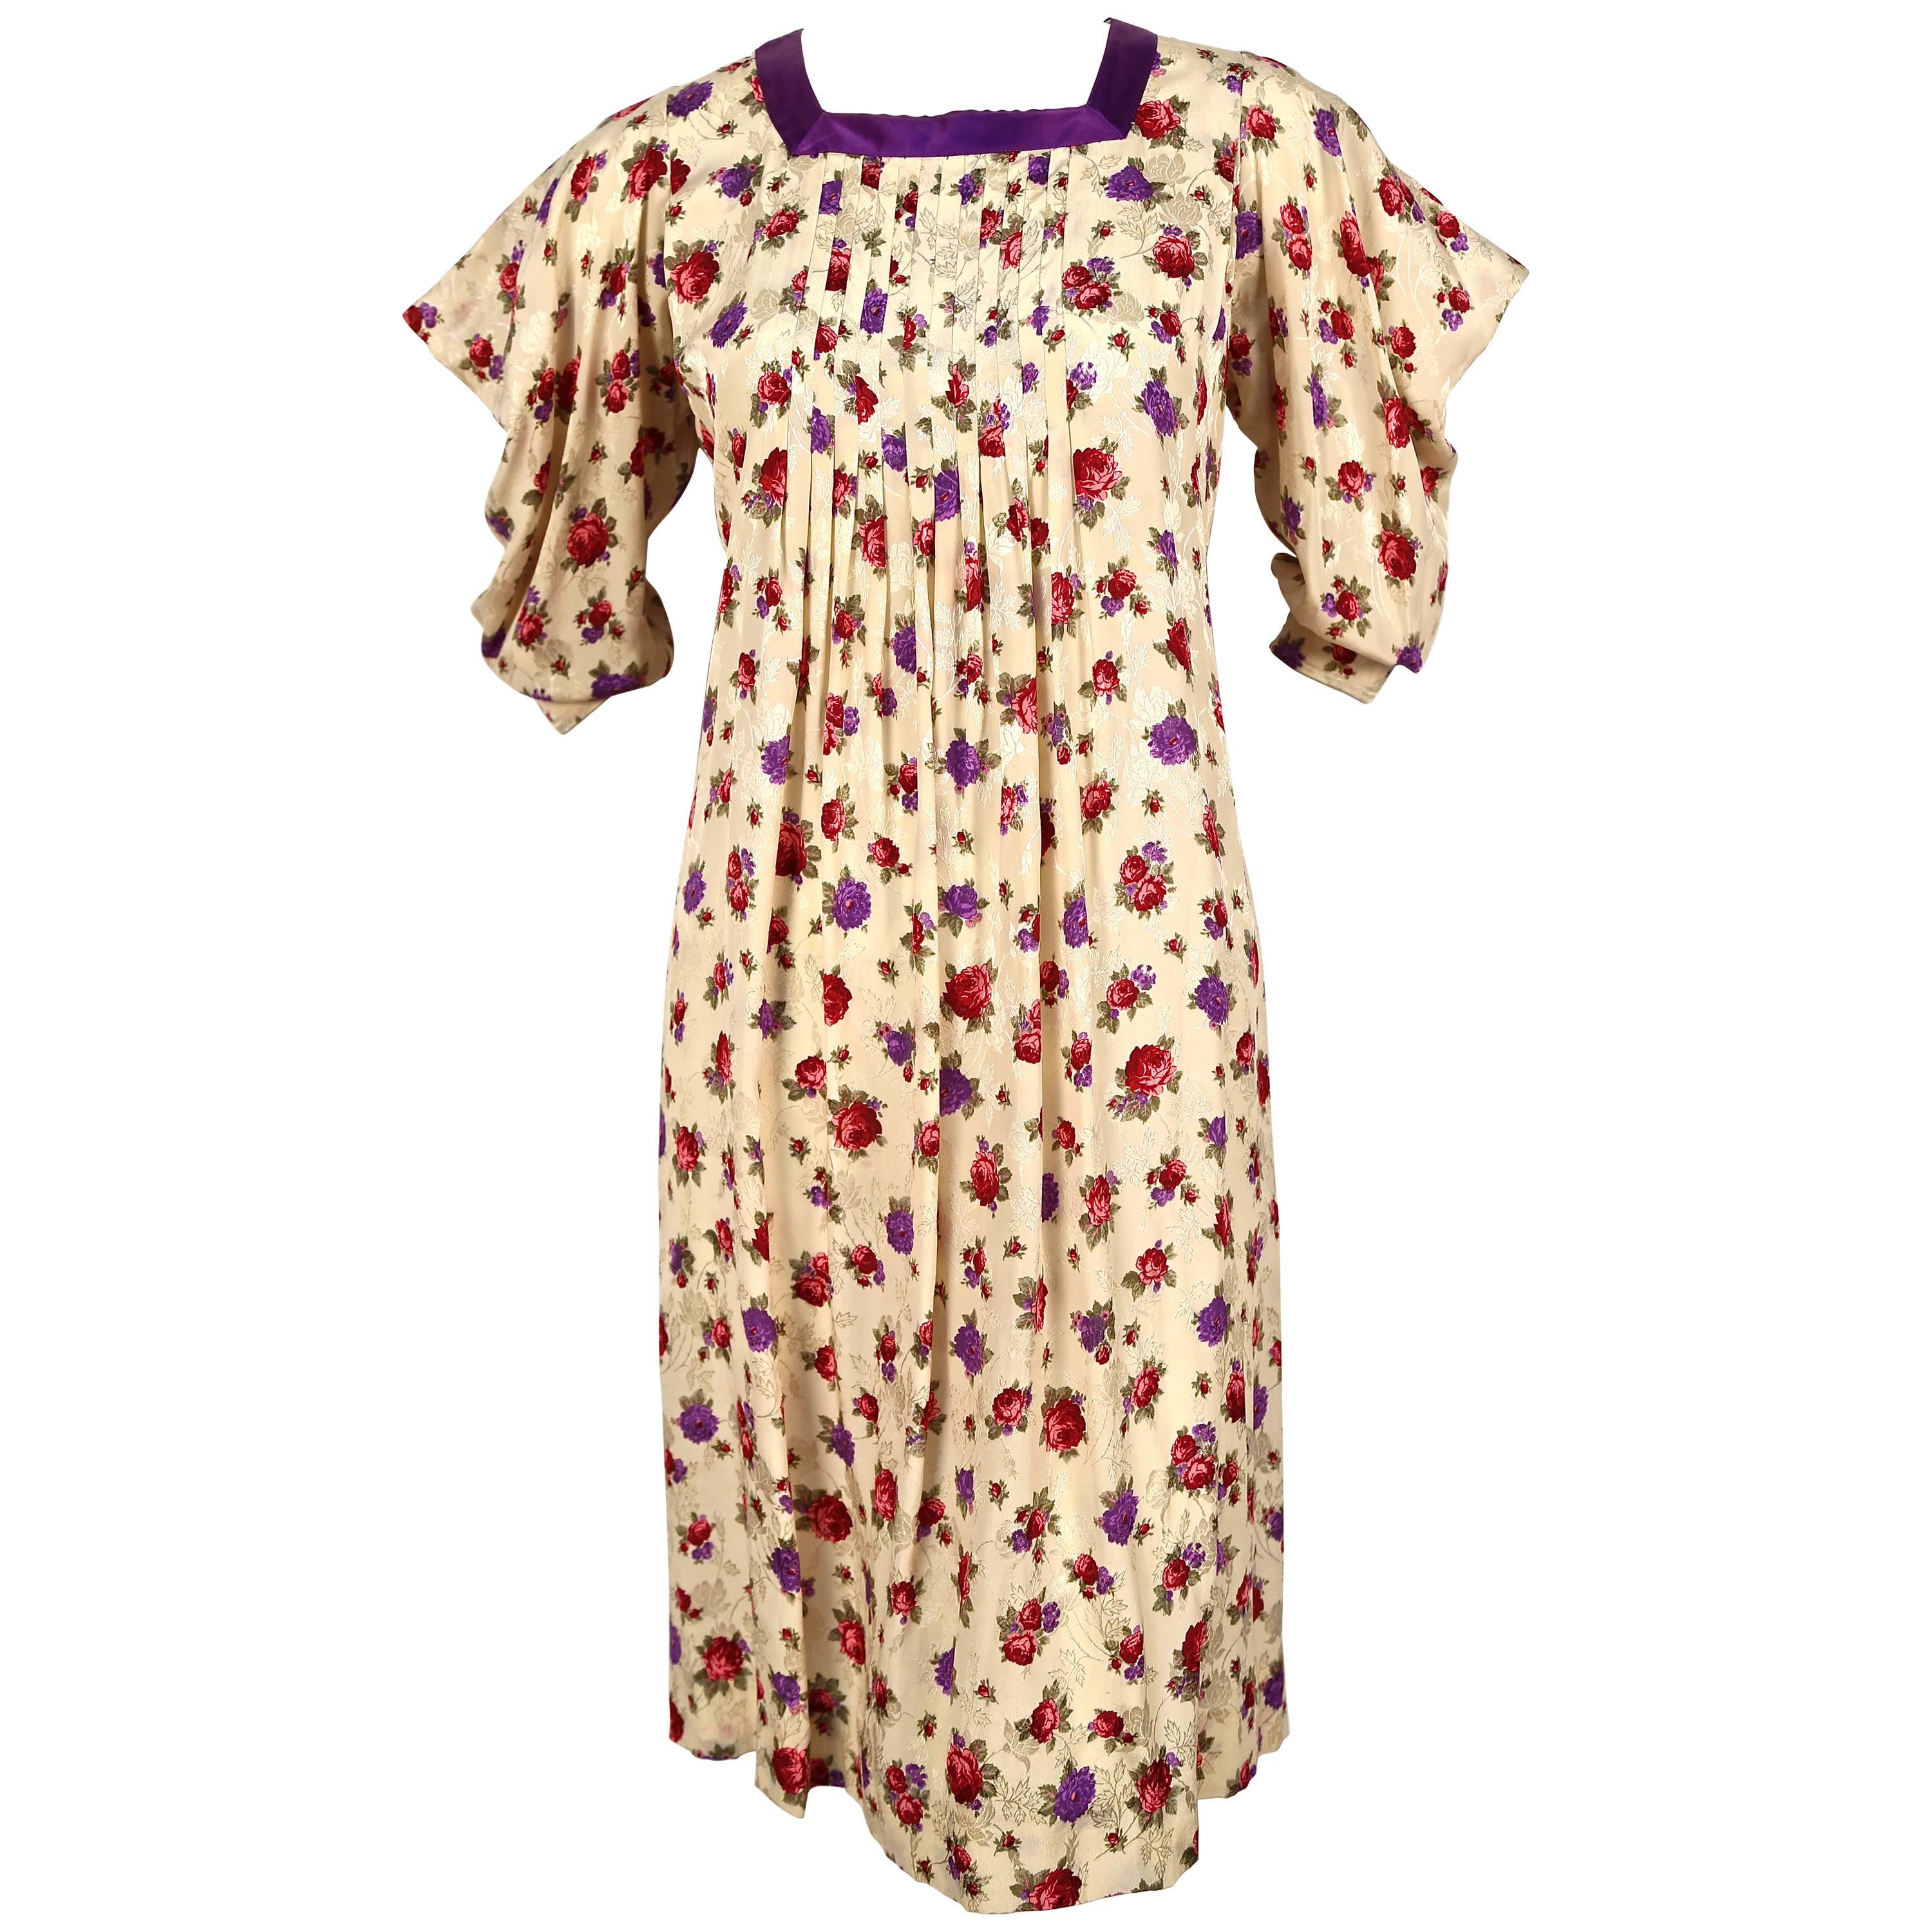 1980's EMANUEL UNGARO silk floral dress with peaked shoulders